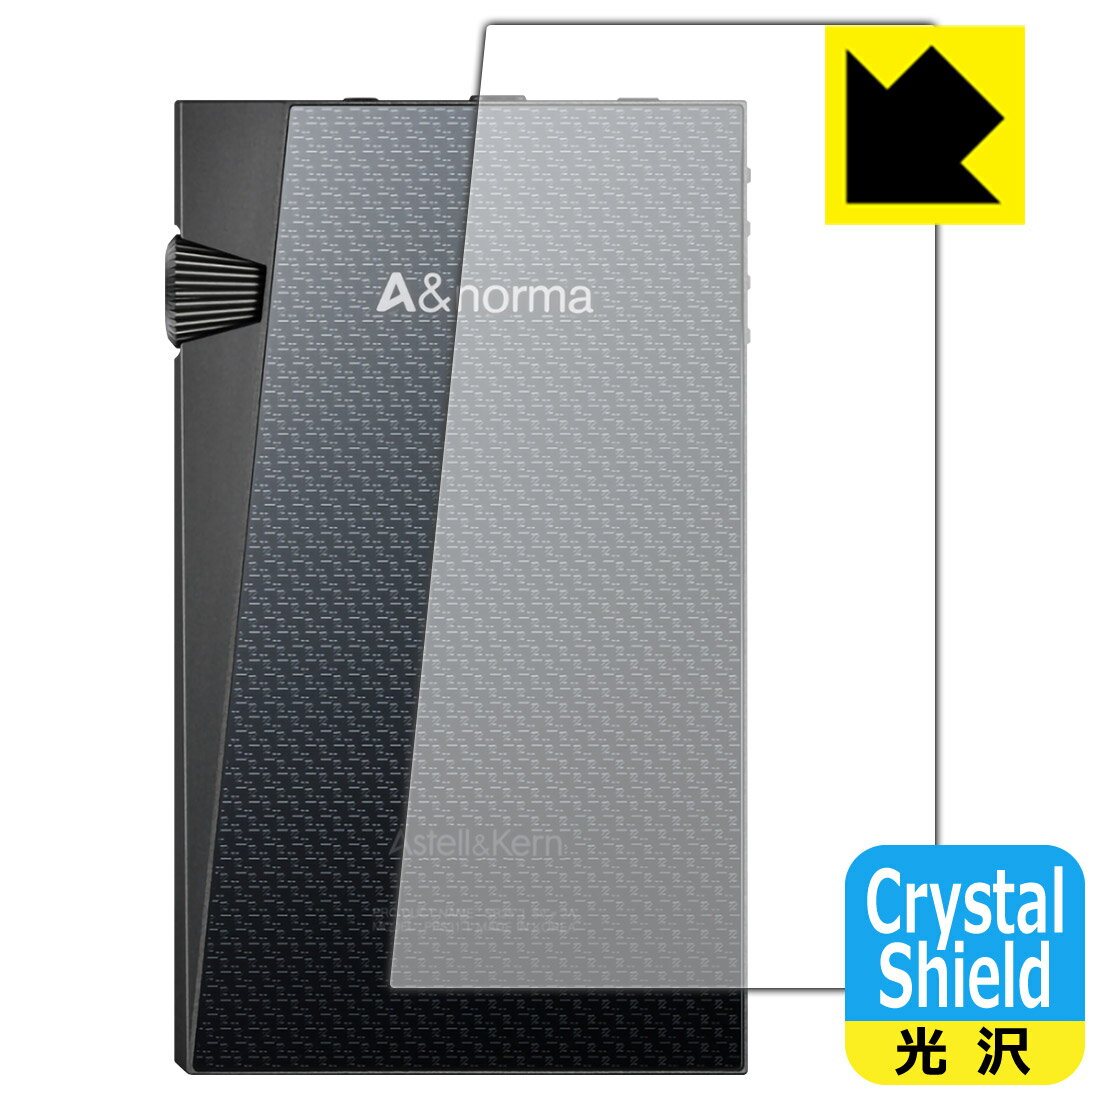 Crystal Shield【光沢】保護フィルム Astell&Kern A&norma SR35 (背面用) 3枚セット 日本製 自社製造直販